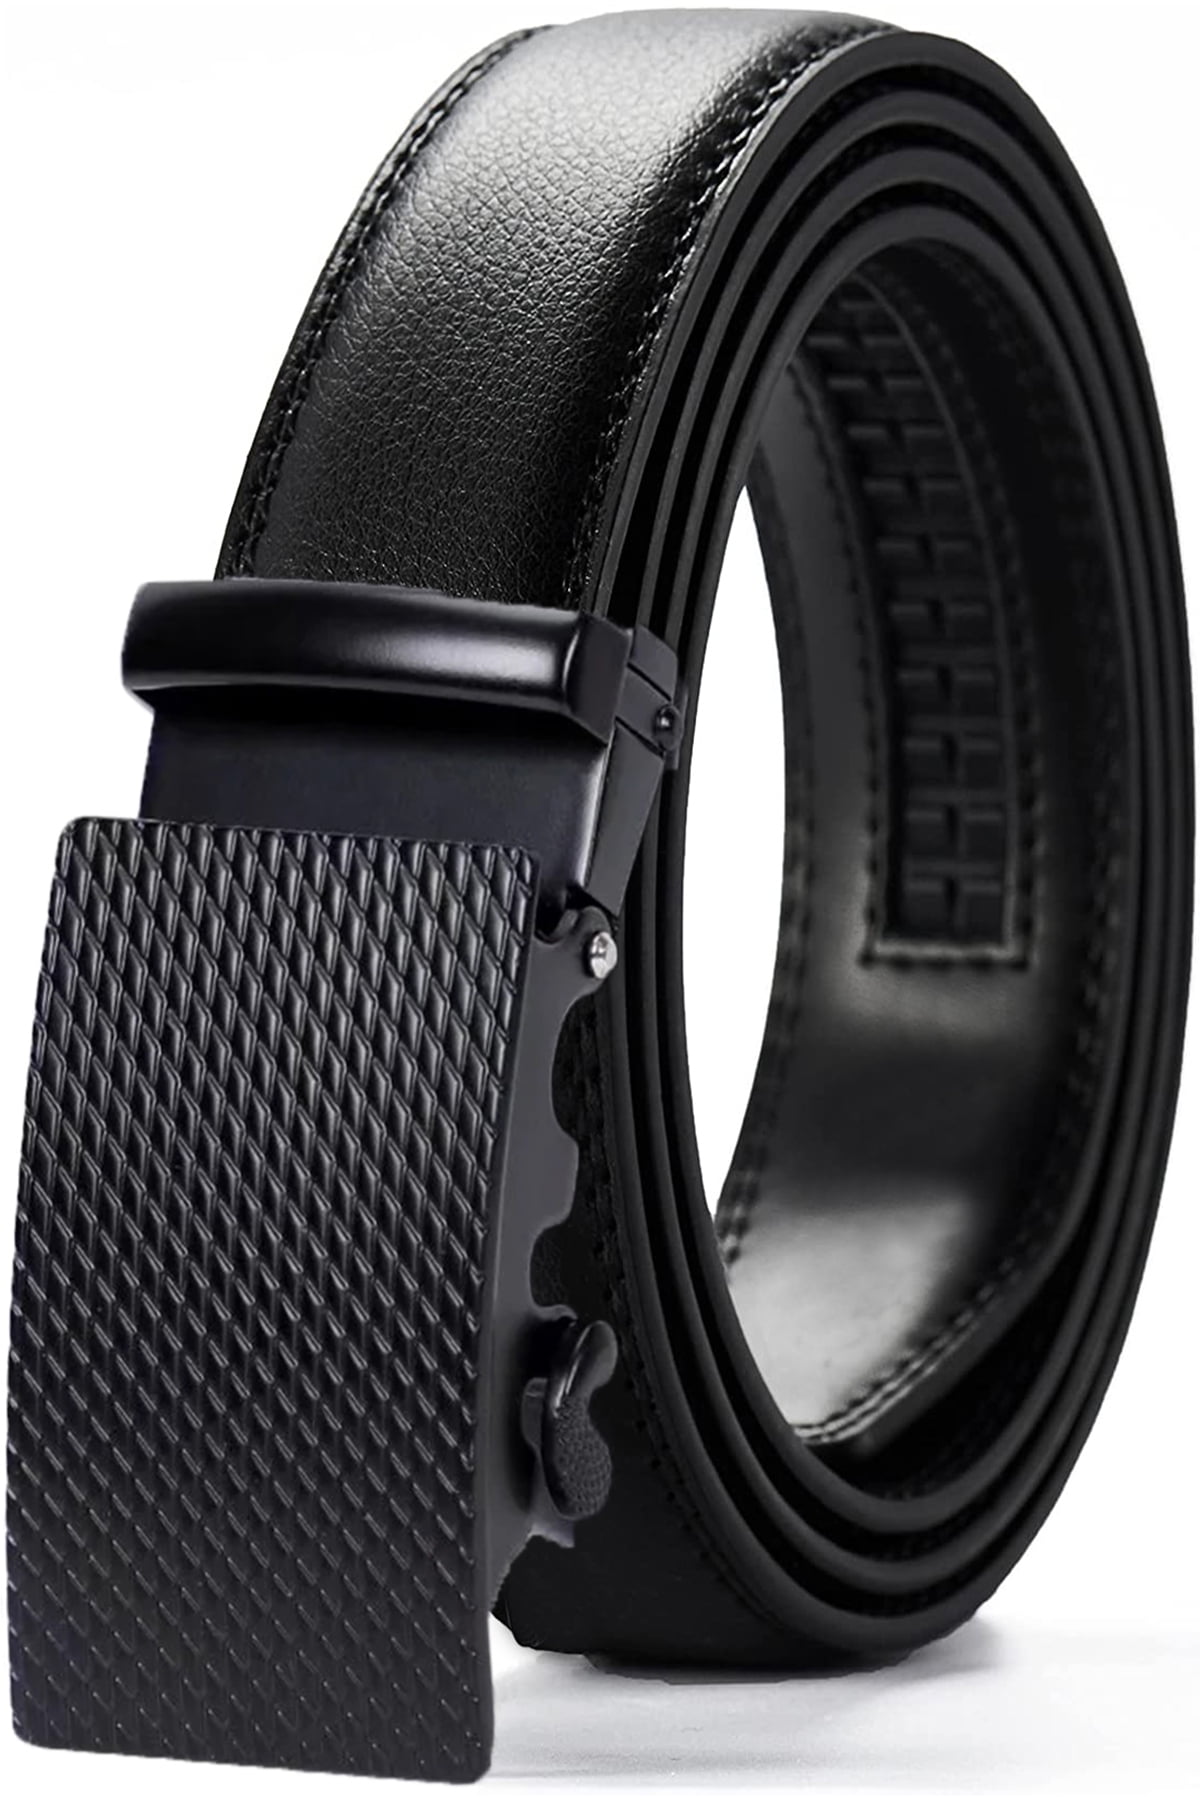 Men's Leather Belt Ratchet Dress Belt with Automatic Buckle Size 132 to 183cm 